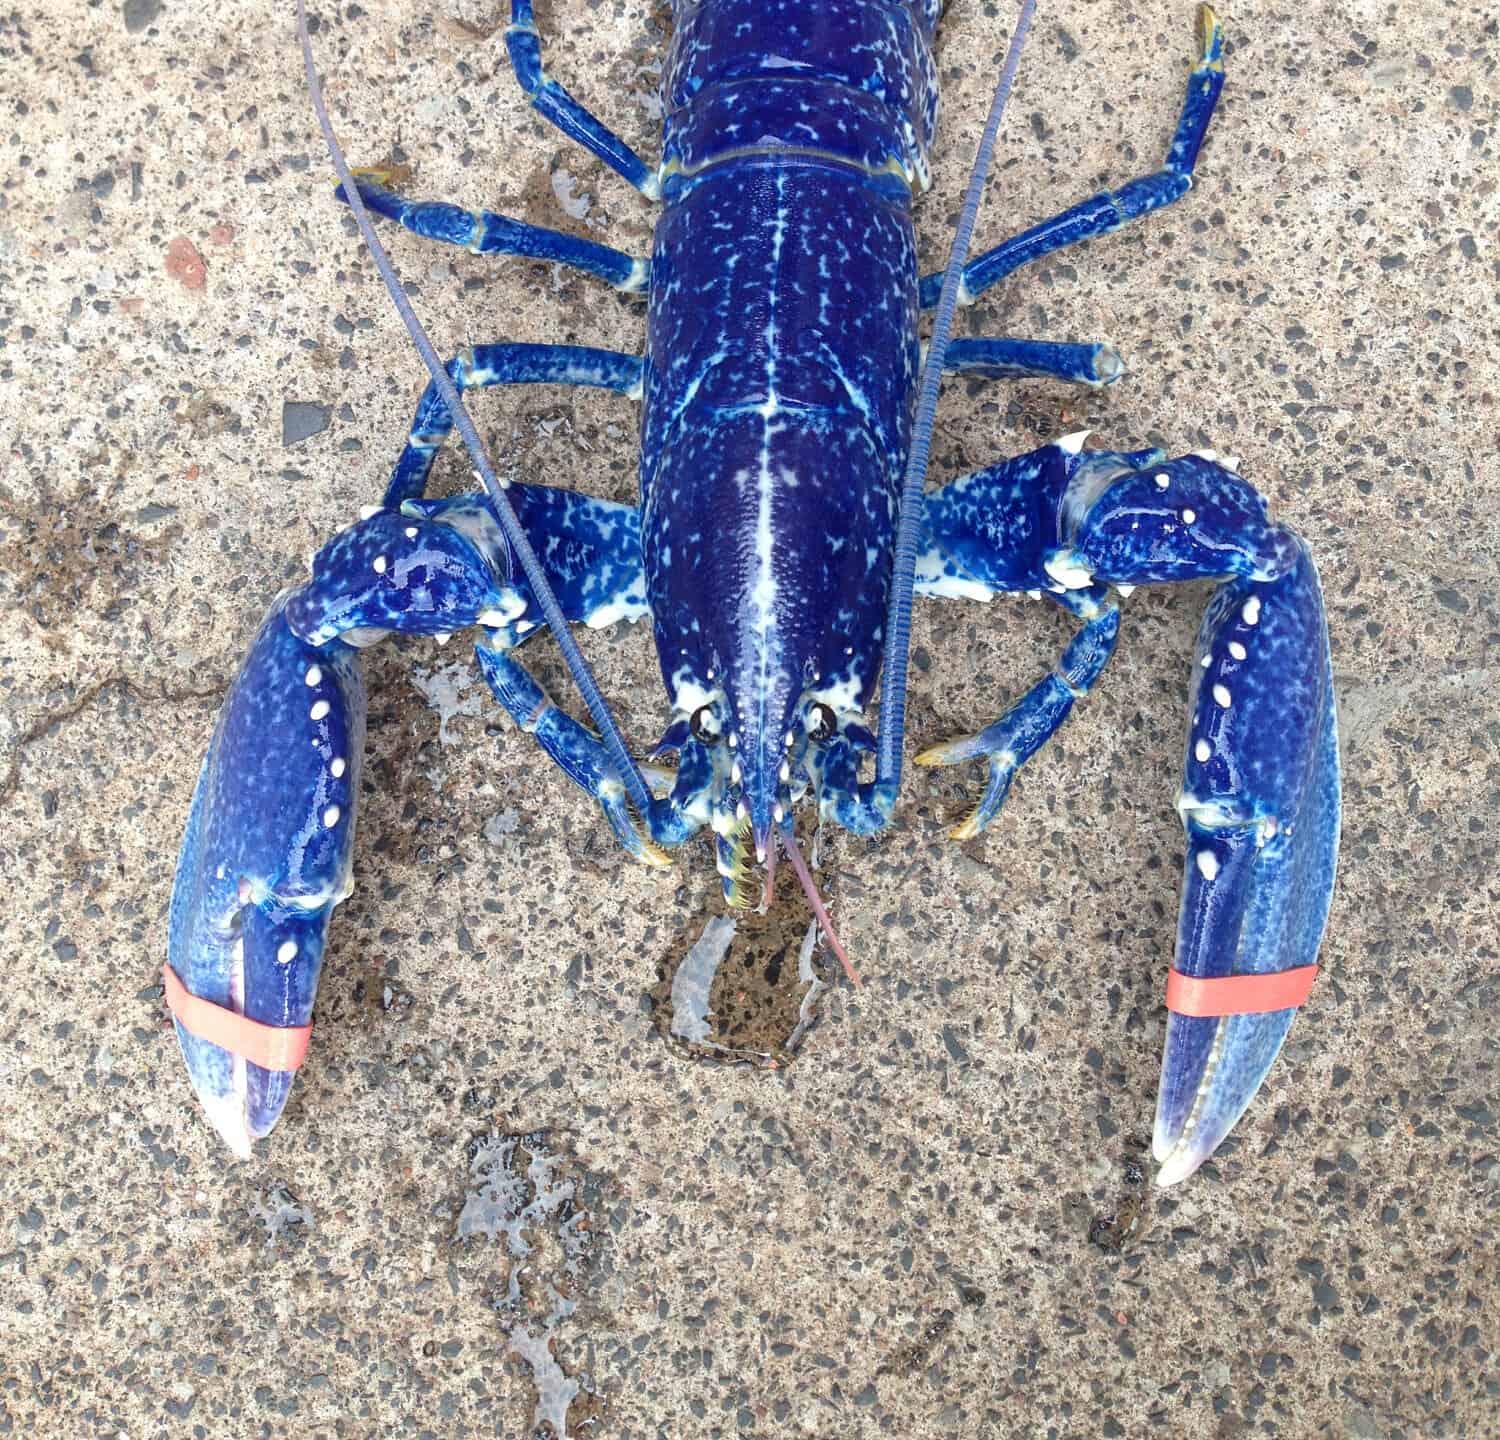 Blue Lobster Unique Strange Fishing. Diving. Rare Marine Life. Blue Homarus gammarus.